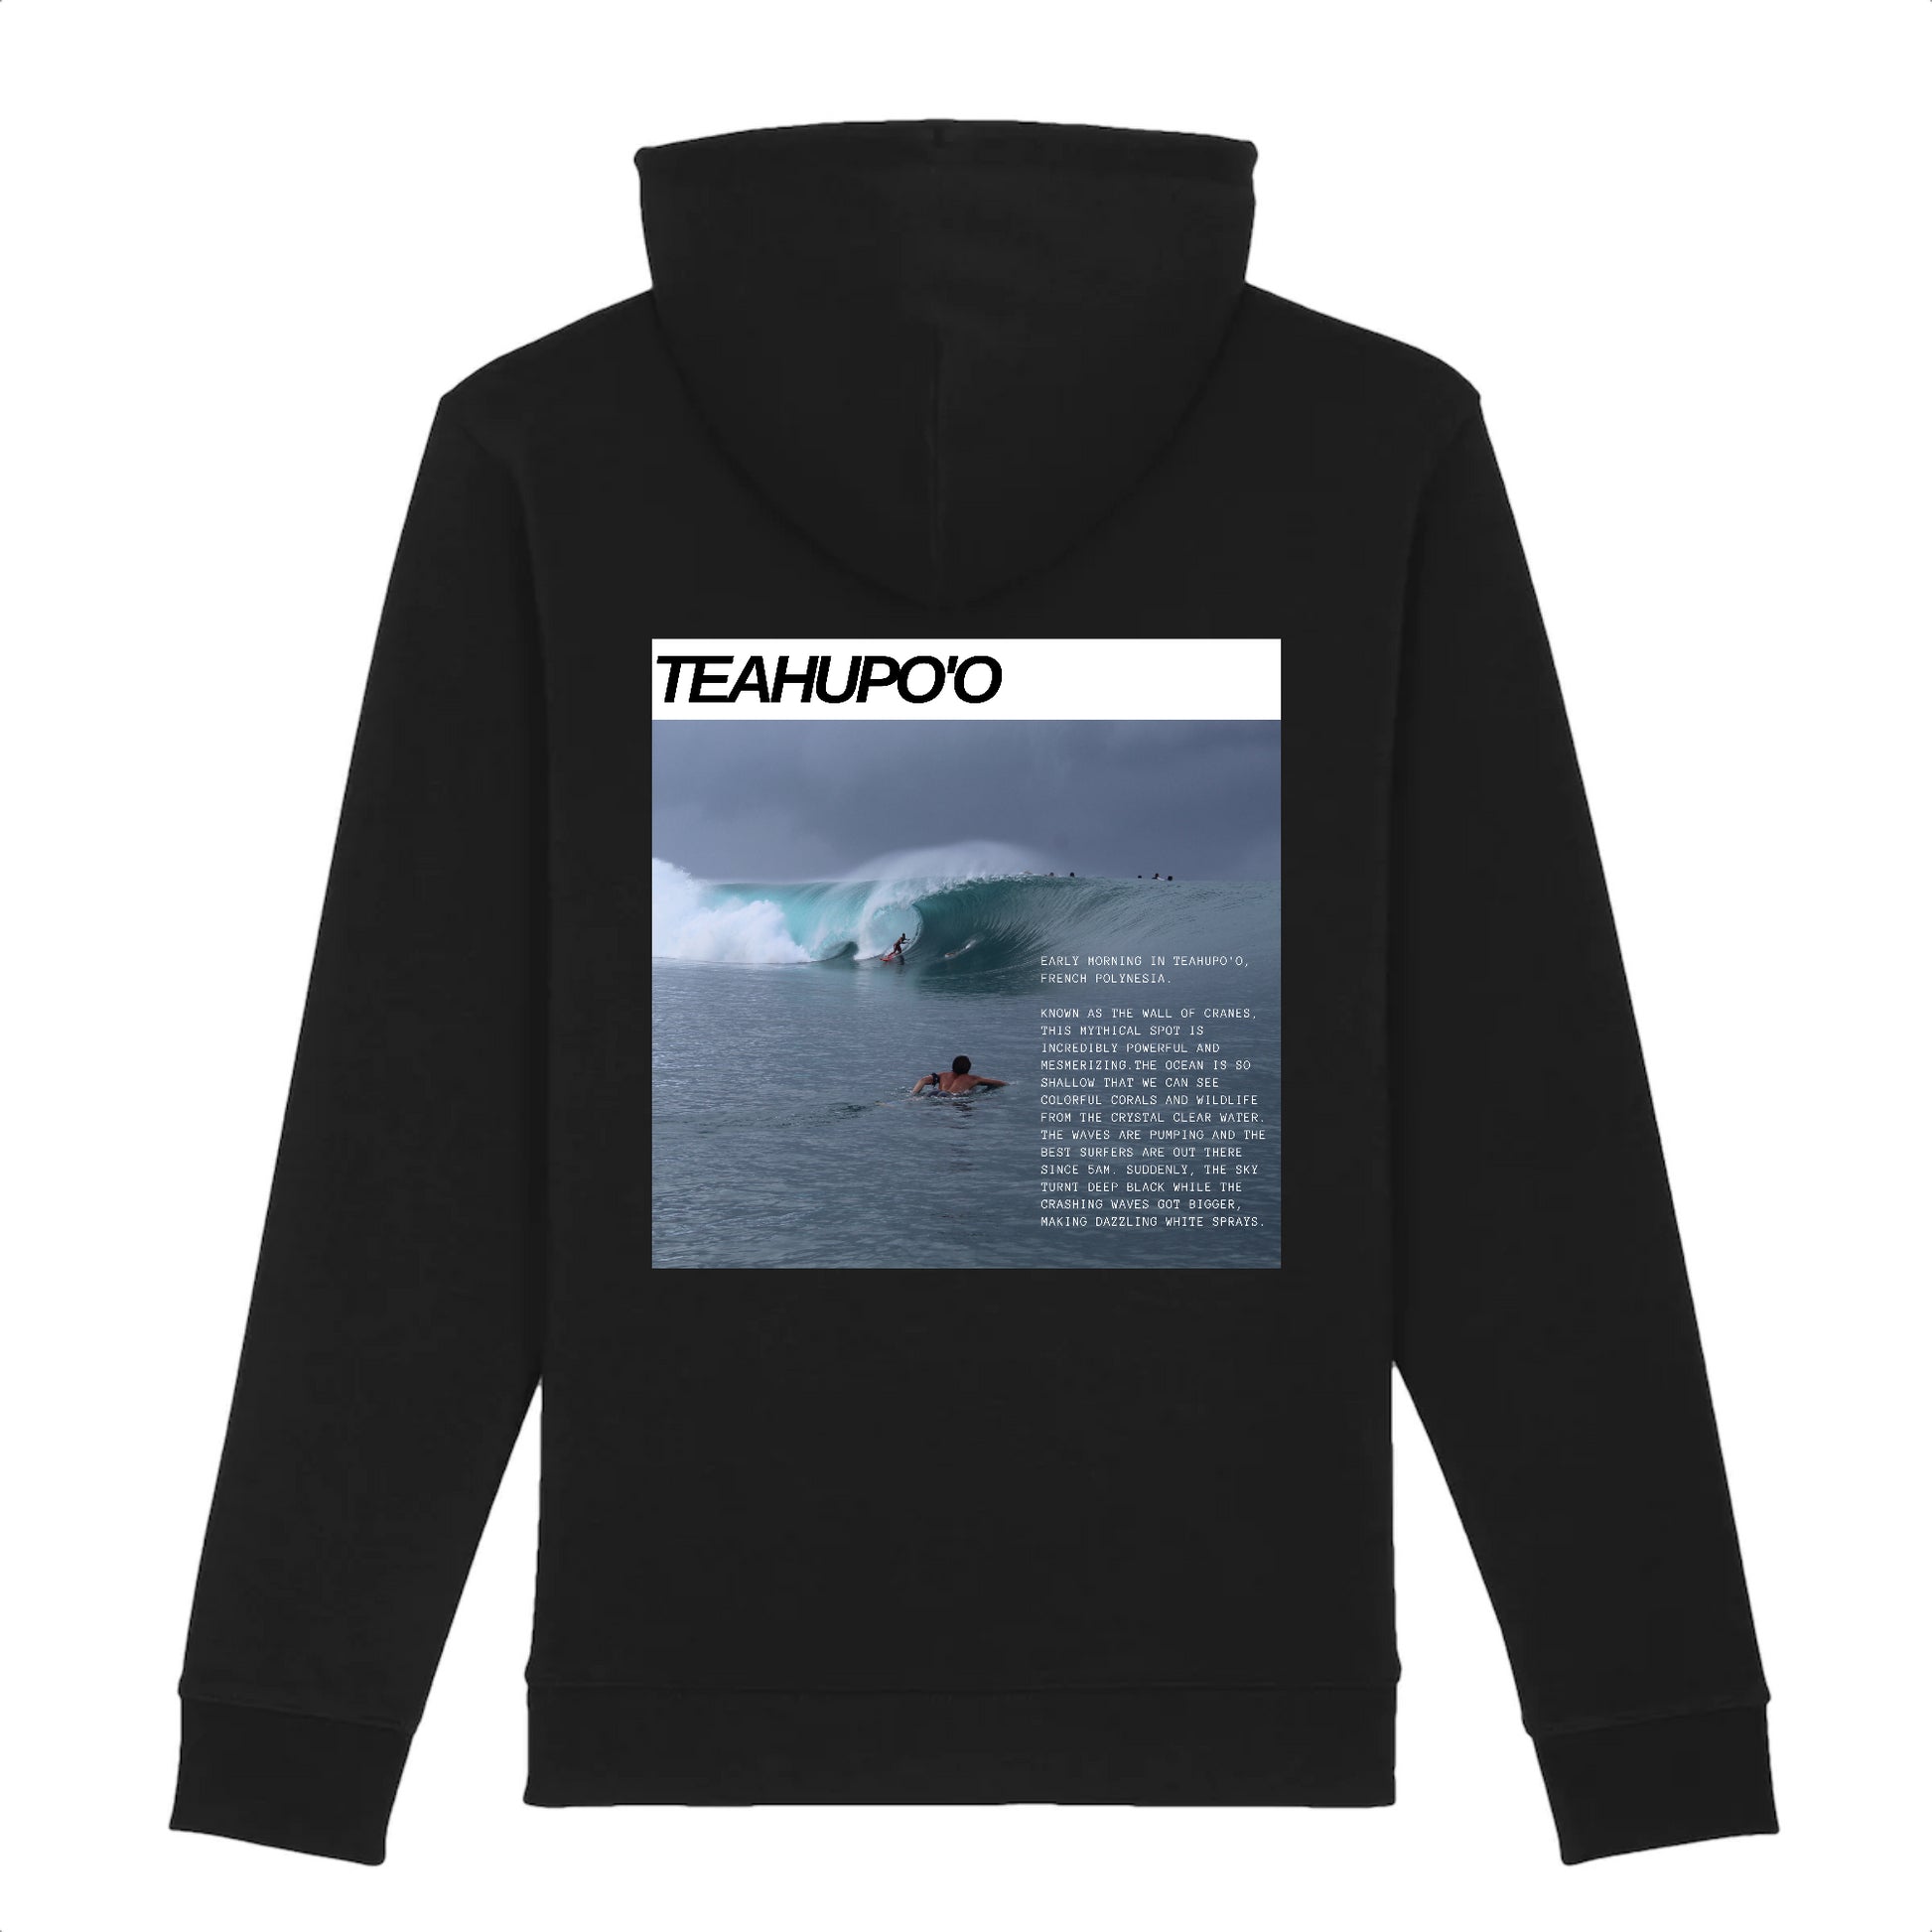 studio rivage teahupoo tahiti polynesie francaise hoodie sweat shirt